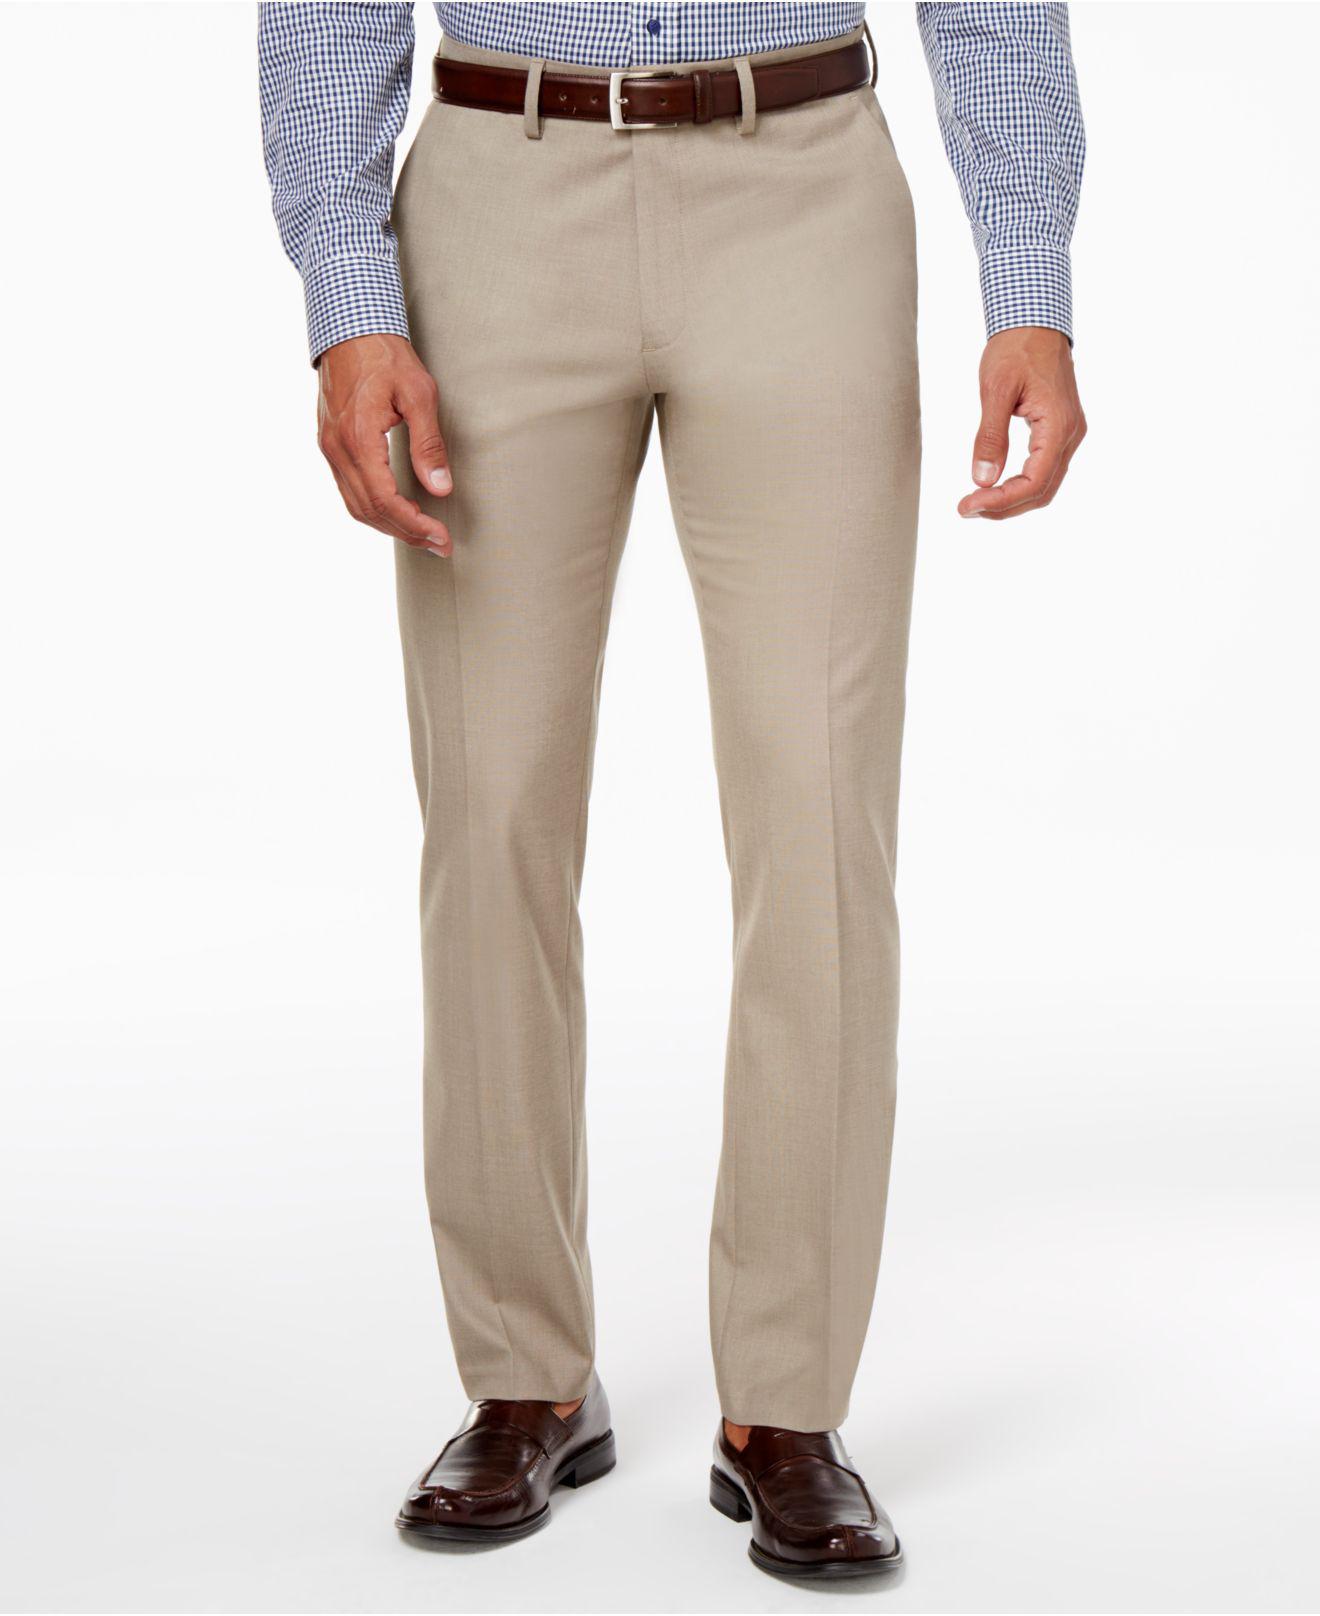 Lyst - Kenneth Cole Reaction Men's Slim-fit Stretch Dress Pants for Men